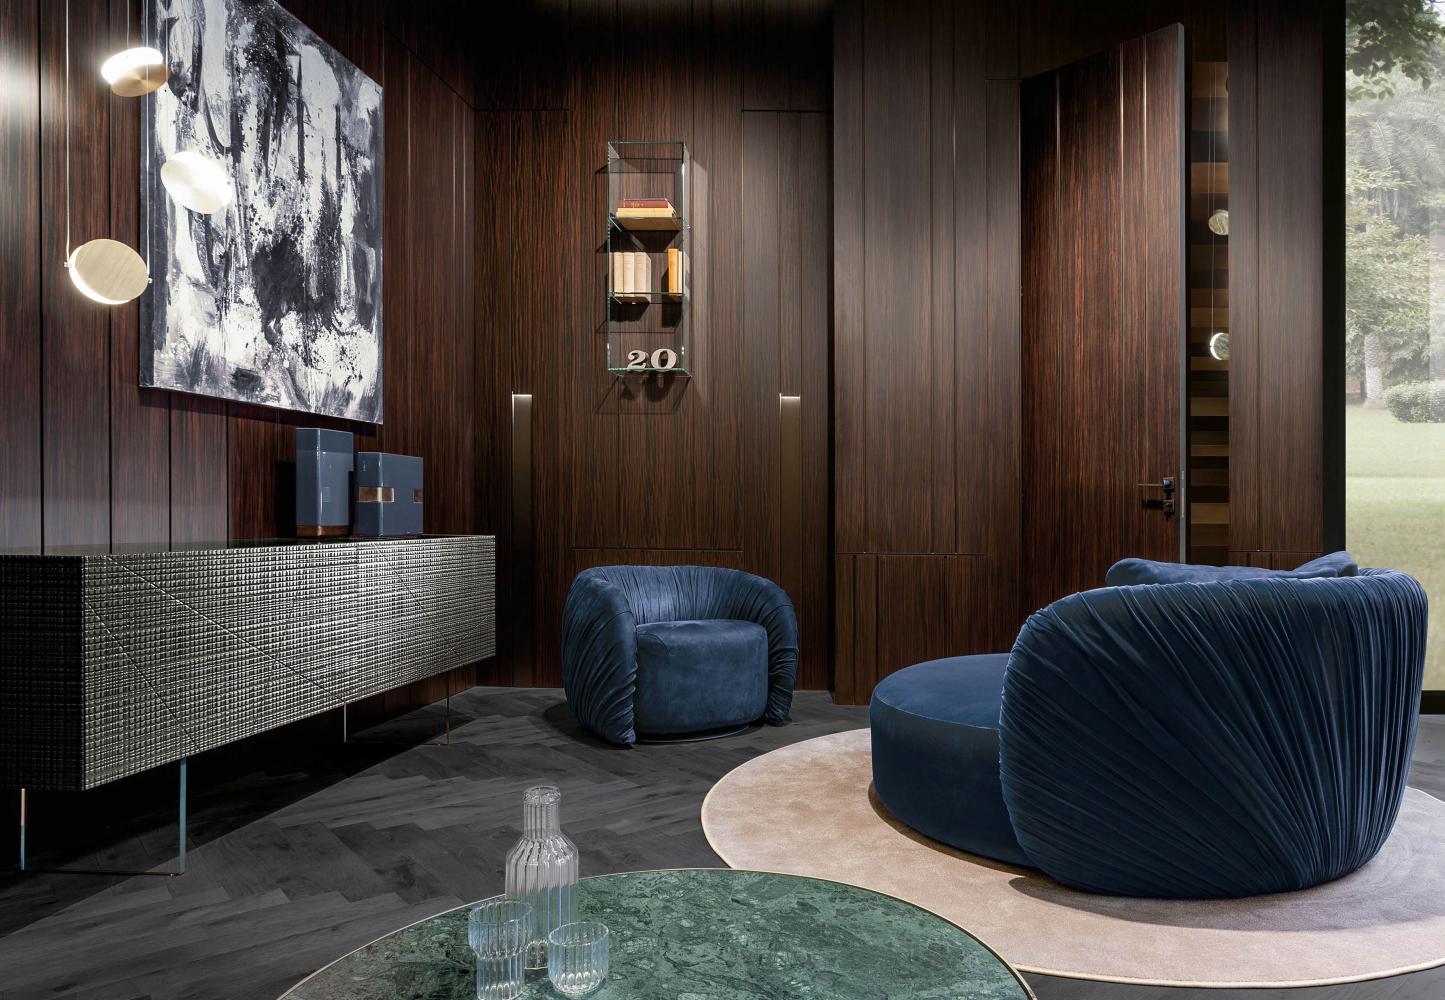 laurameroni luxury livingroom interior design inspiration catalogue